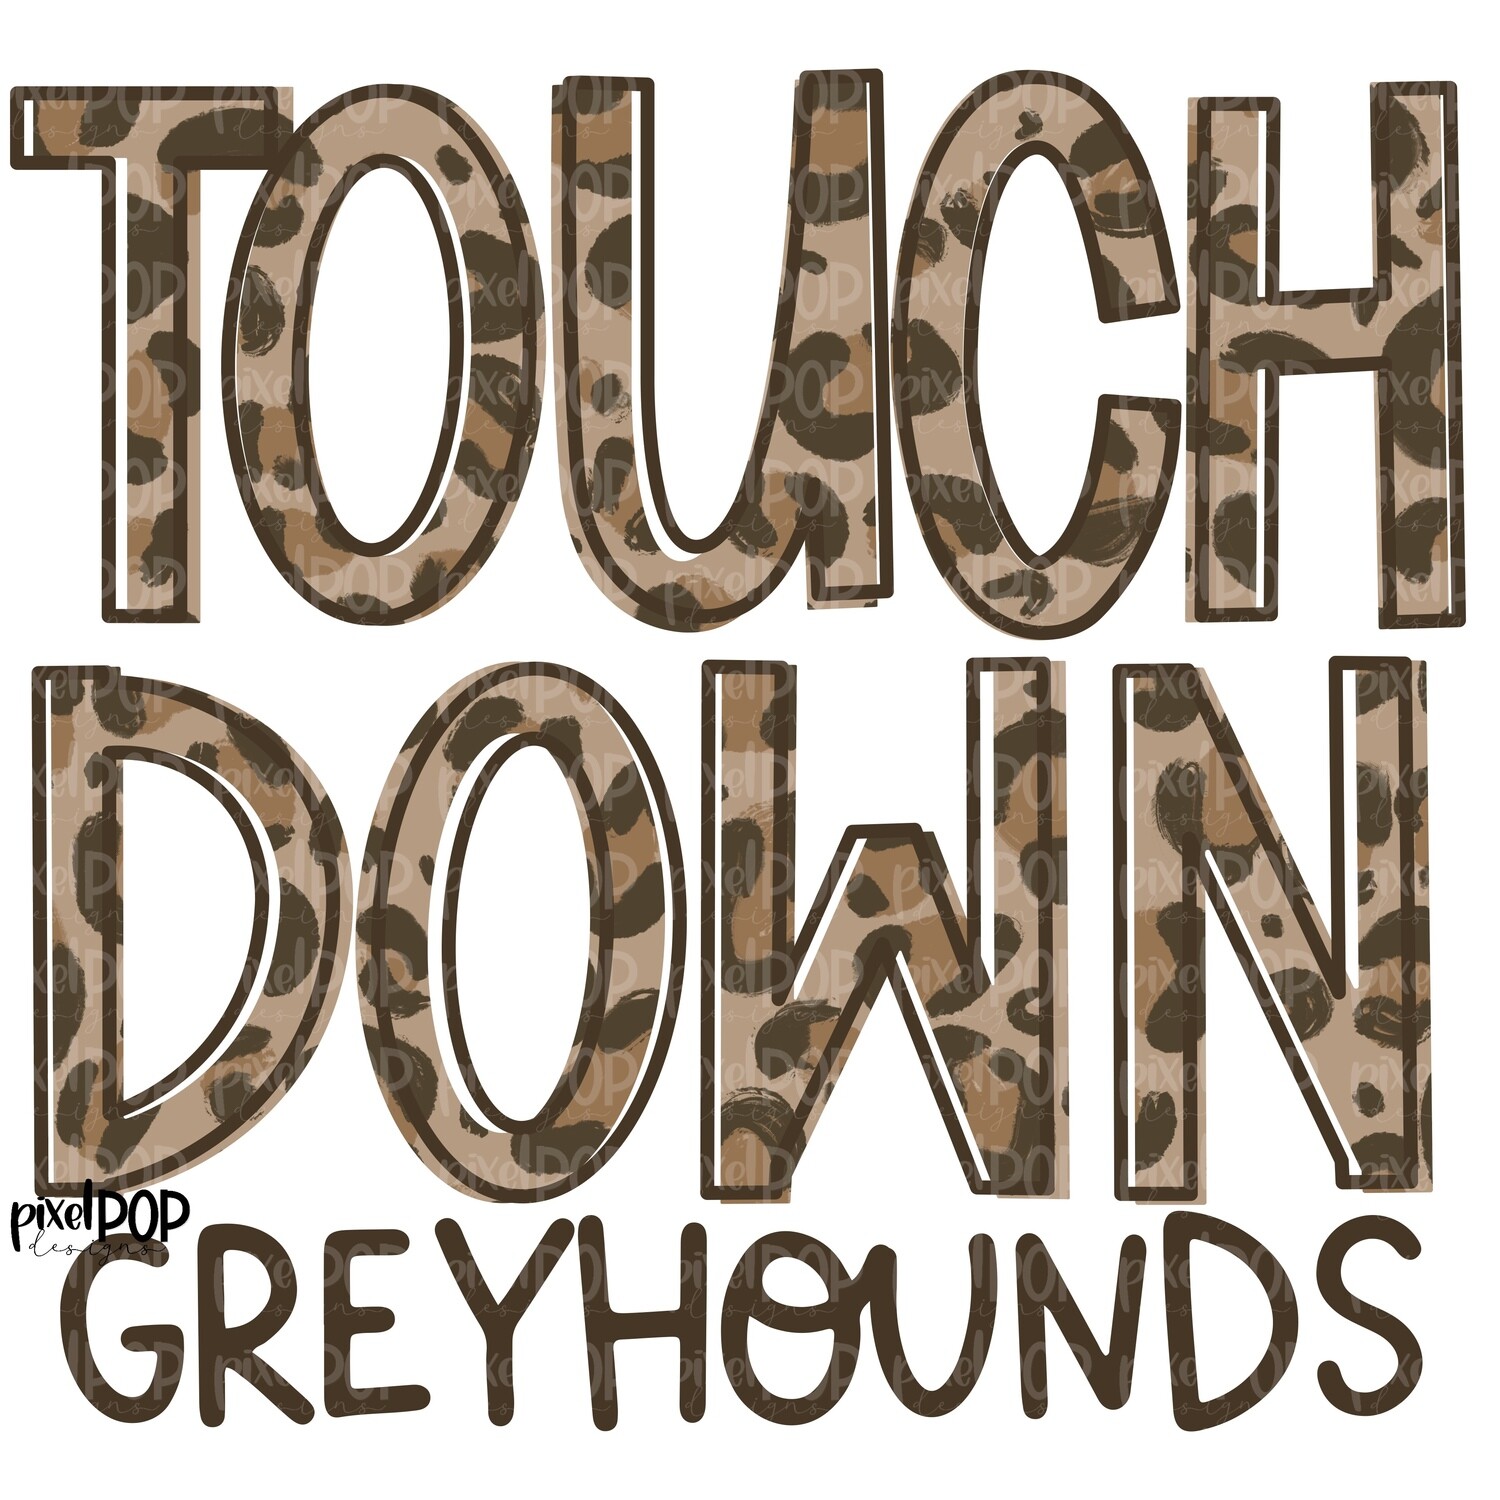 Greyhounds Touchdown Leopard Print Mascot PNG | Greyhounds Sublimation Design | Team Spirit Design | Greyhounds Clip Art | Digital Download | Printable Artwork | Sports Art